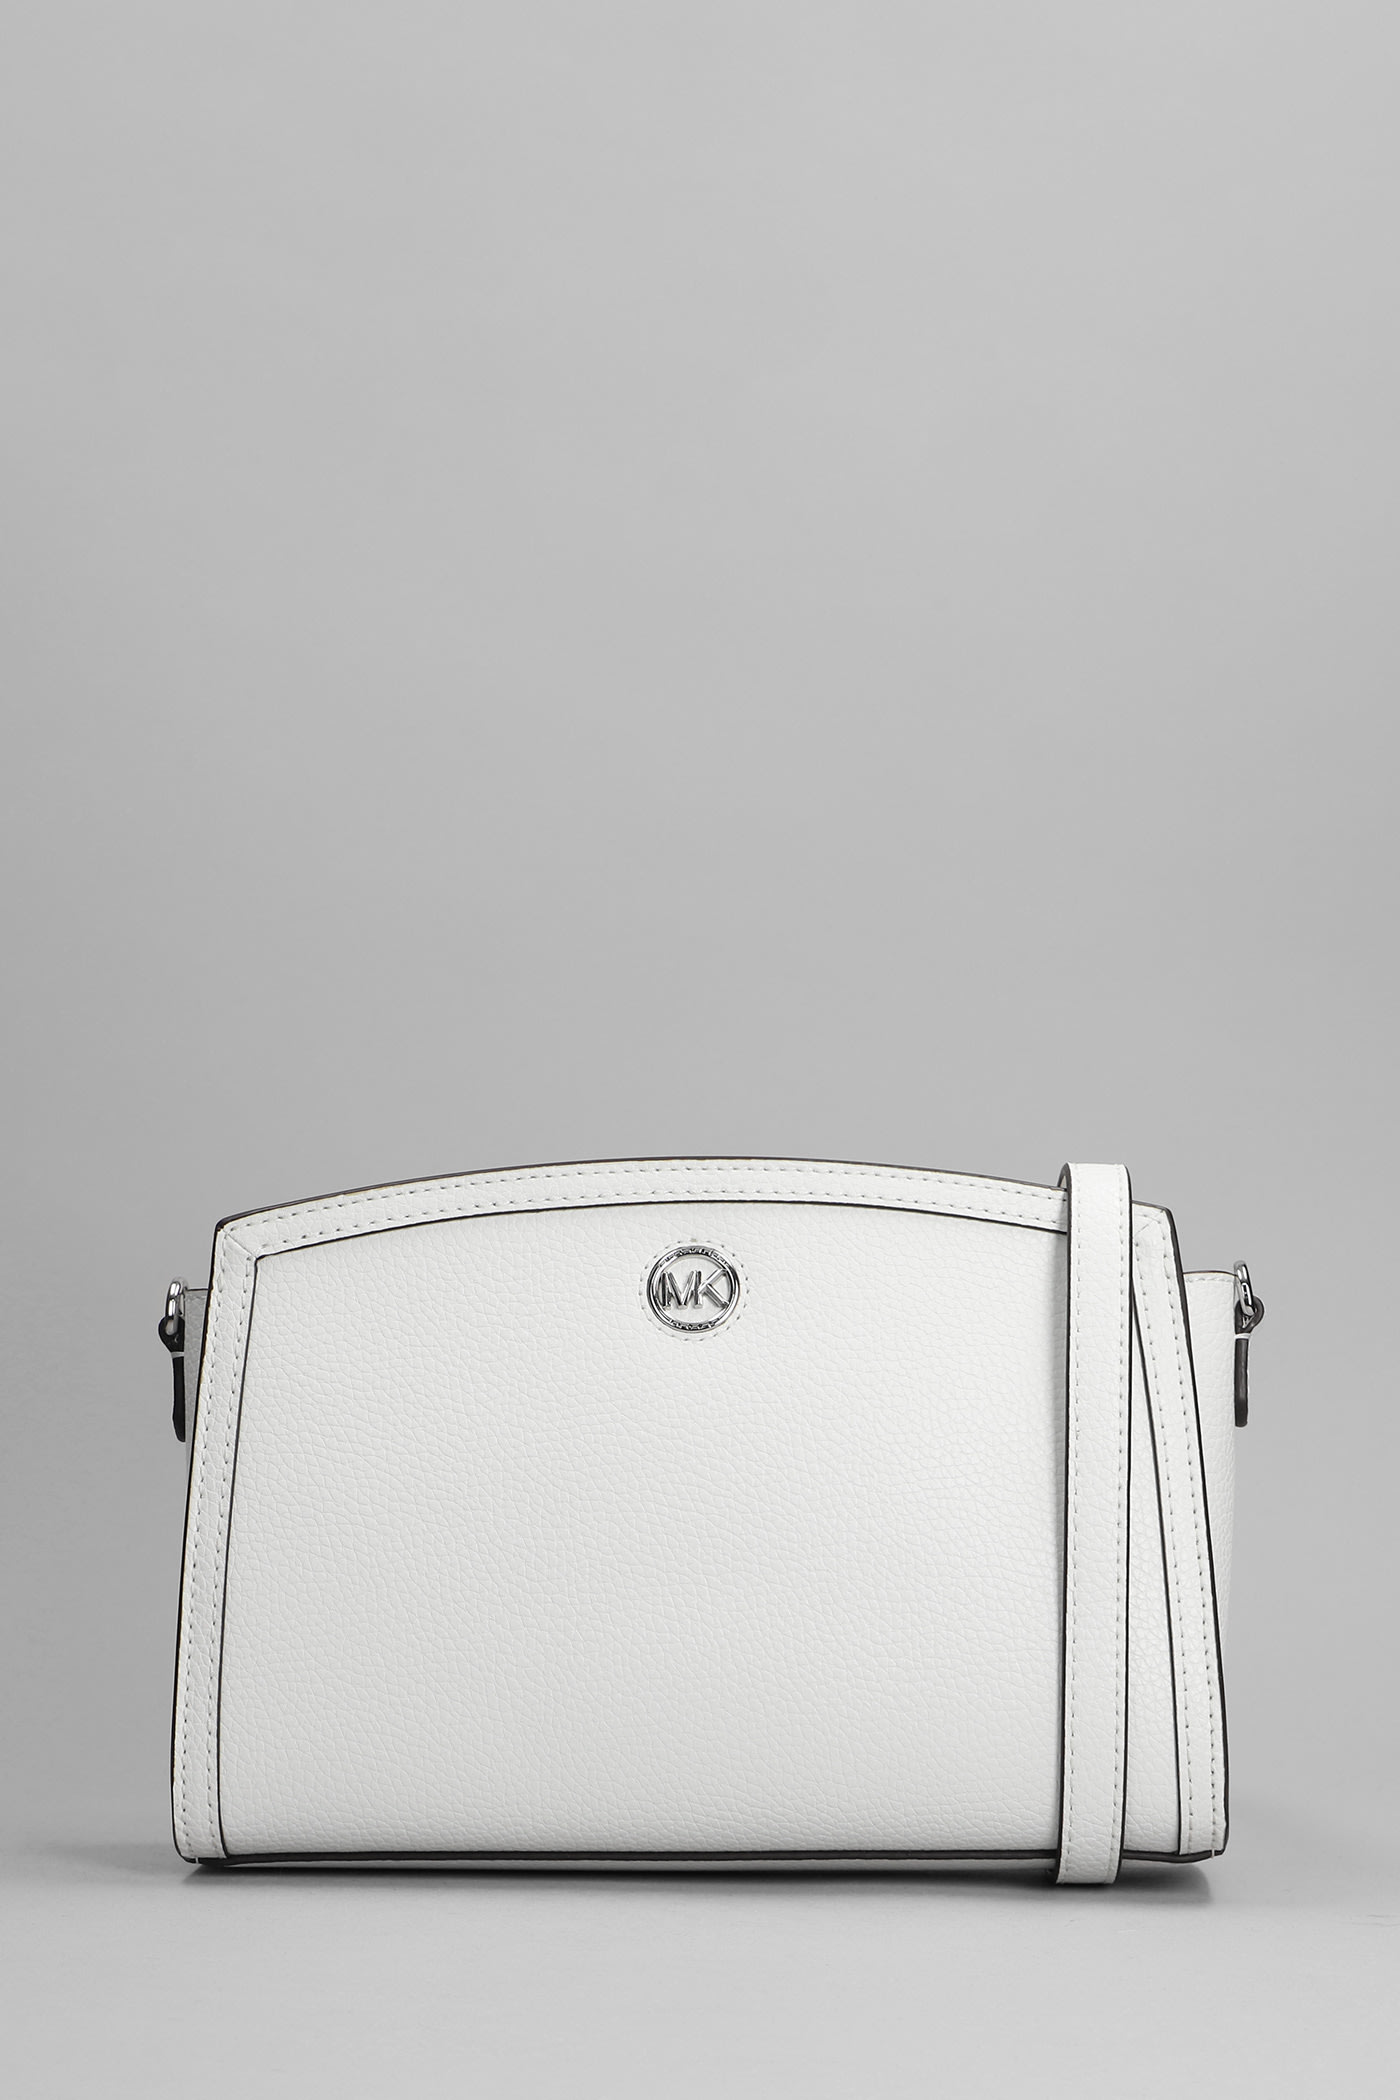 Michael Kors Chantal Shoulder Bag In White Leather